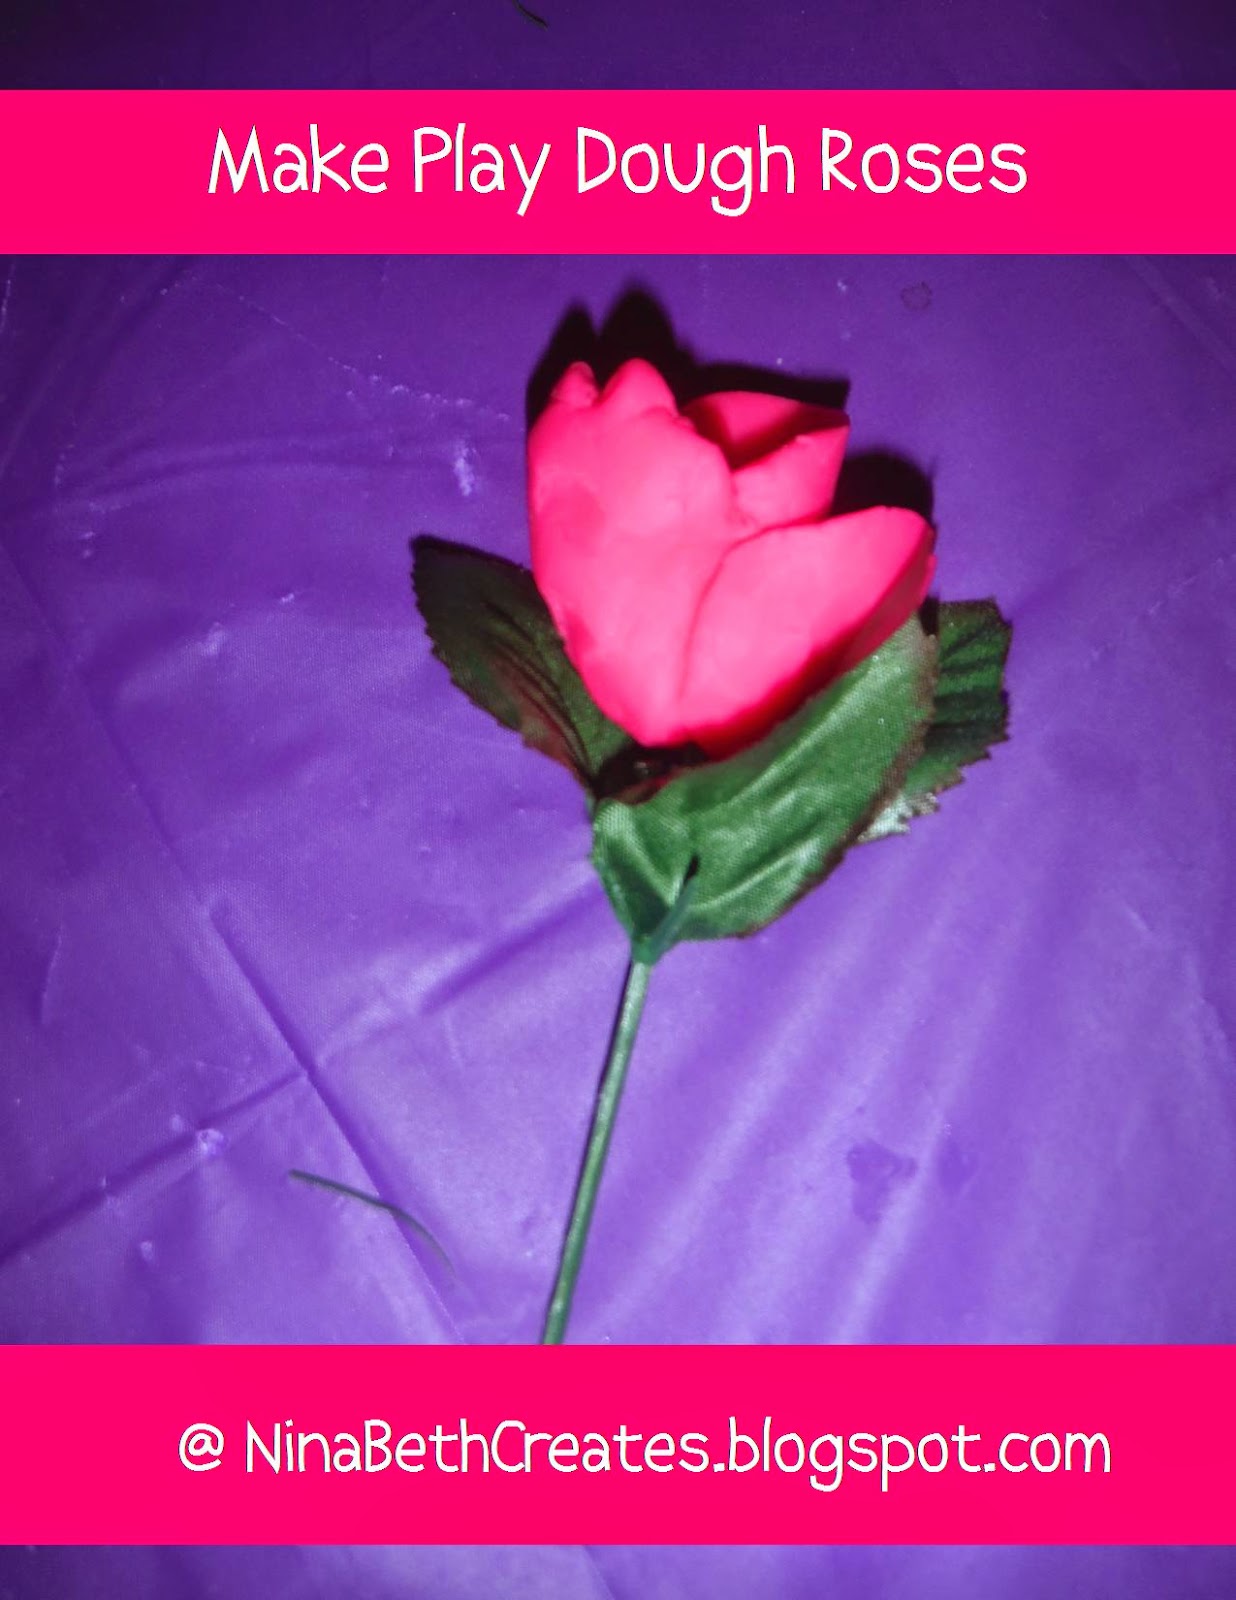 http://ninabethcreates.blogspot.com/2014/12/make-play-dough-roses-with-seven-simple.html